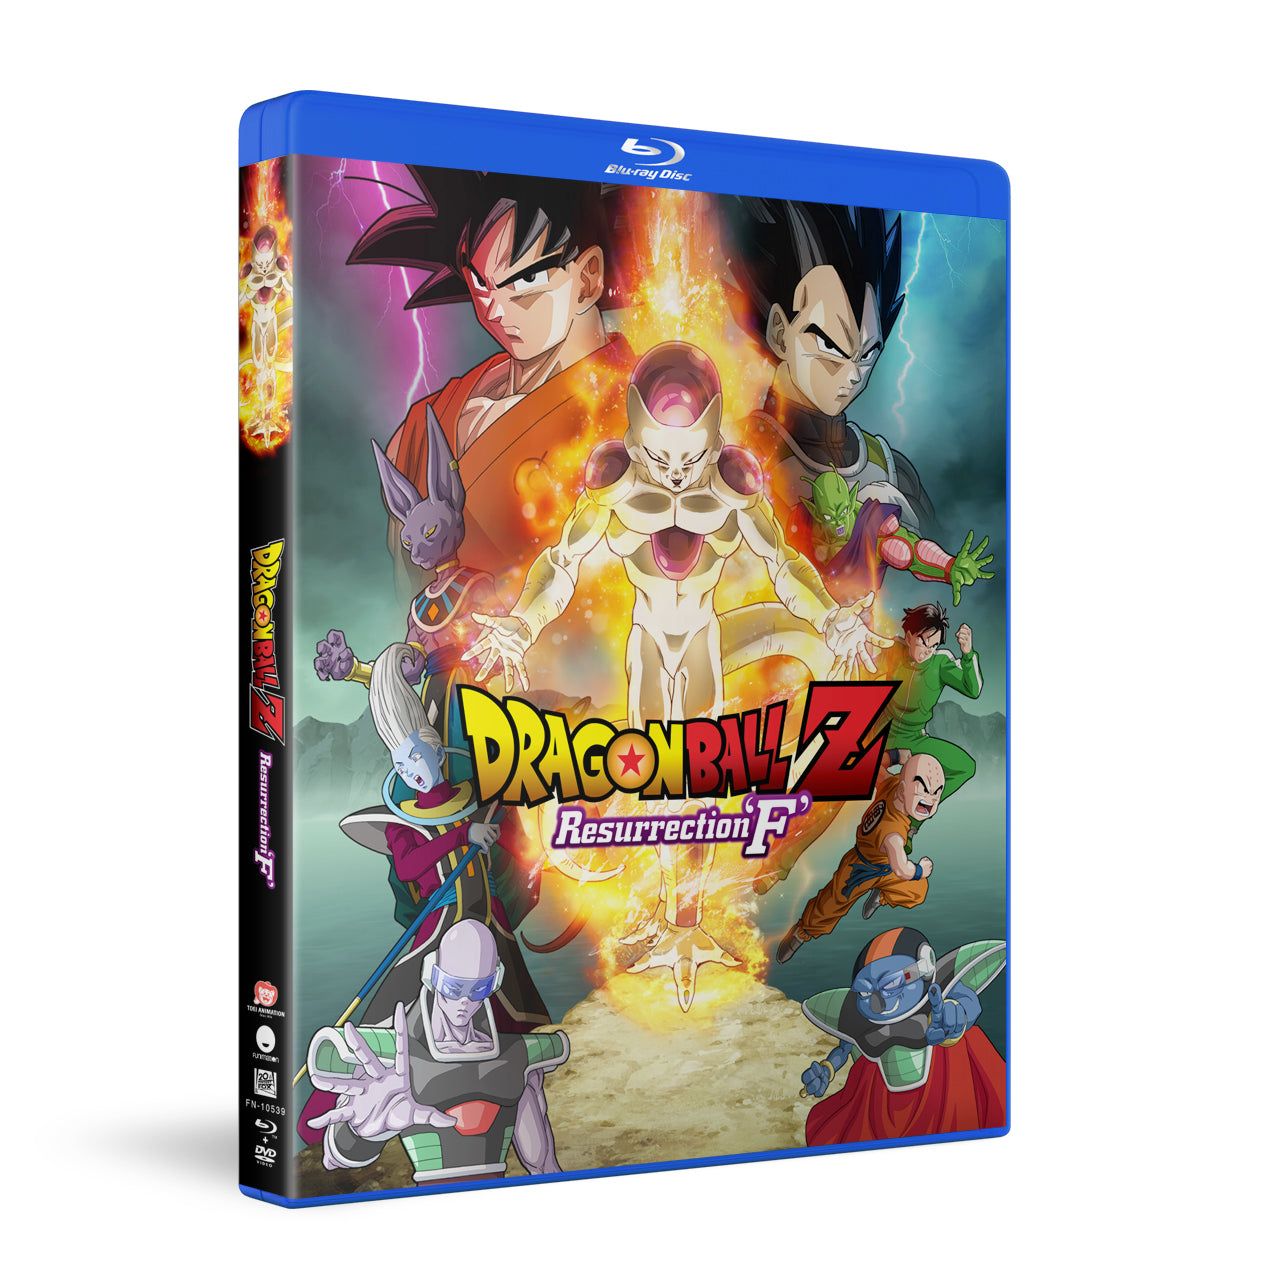 Dragon Ball Z - Resurrection 'F' - Blu-ray + DVD image count 2